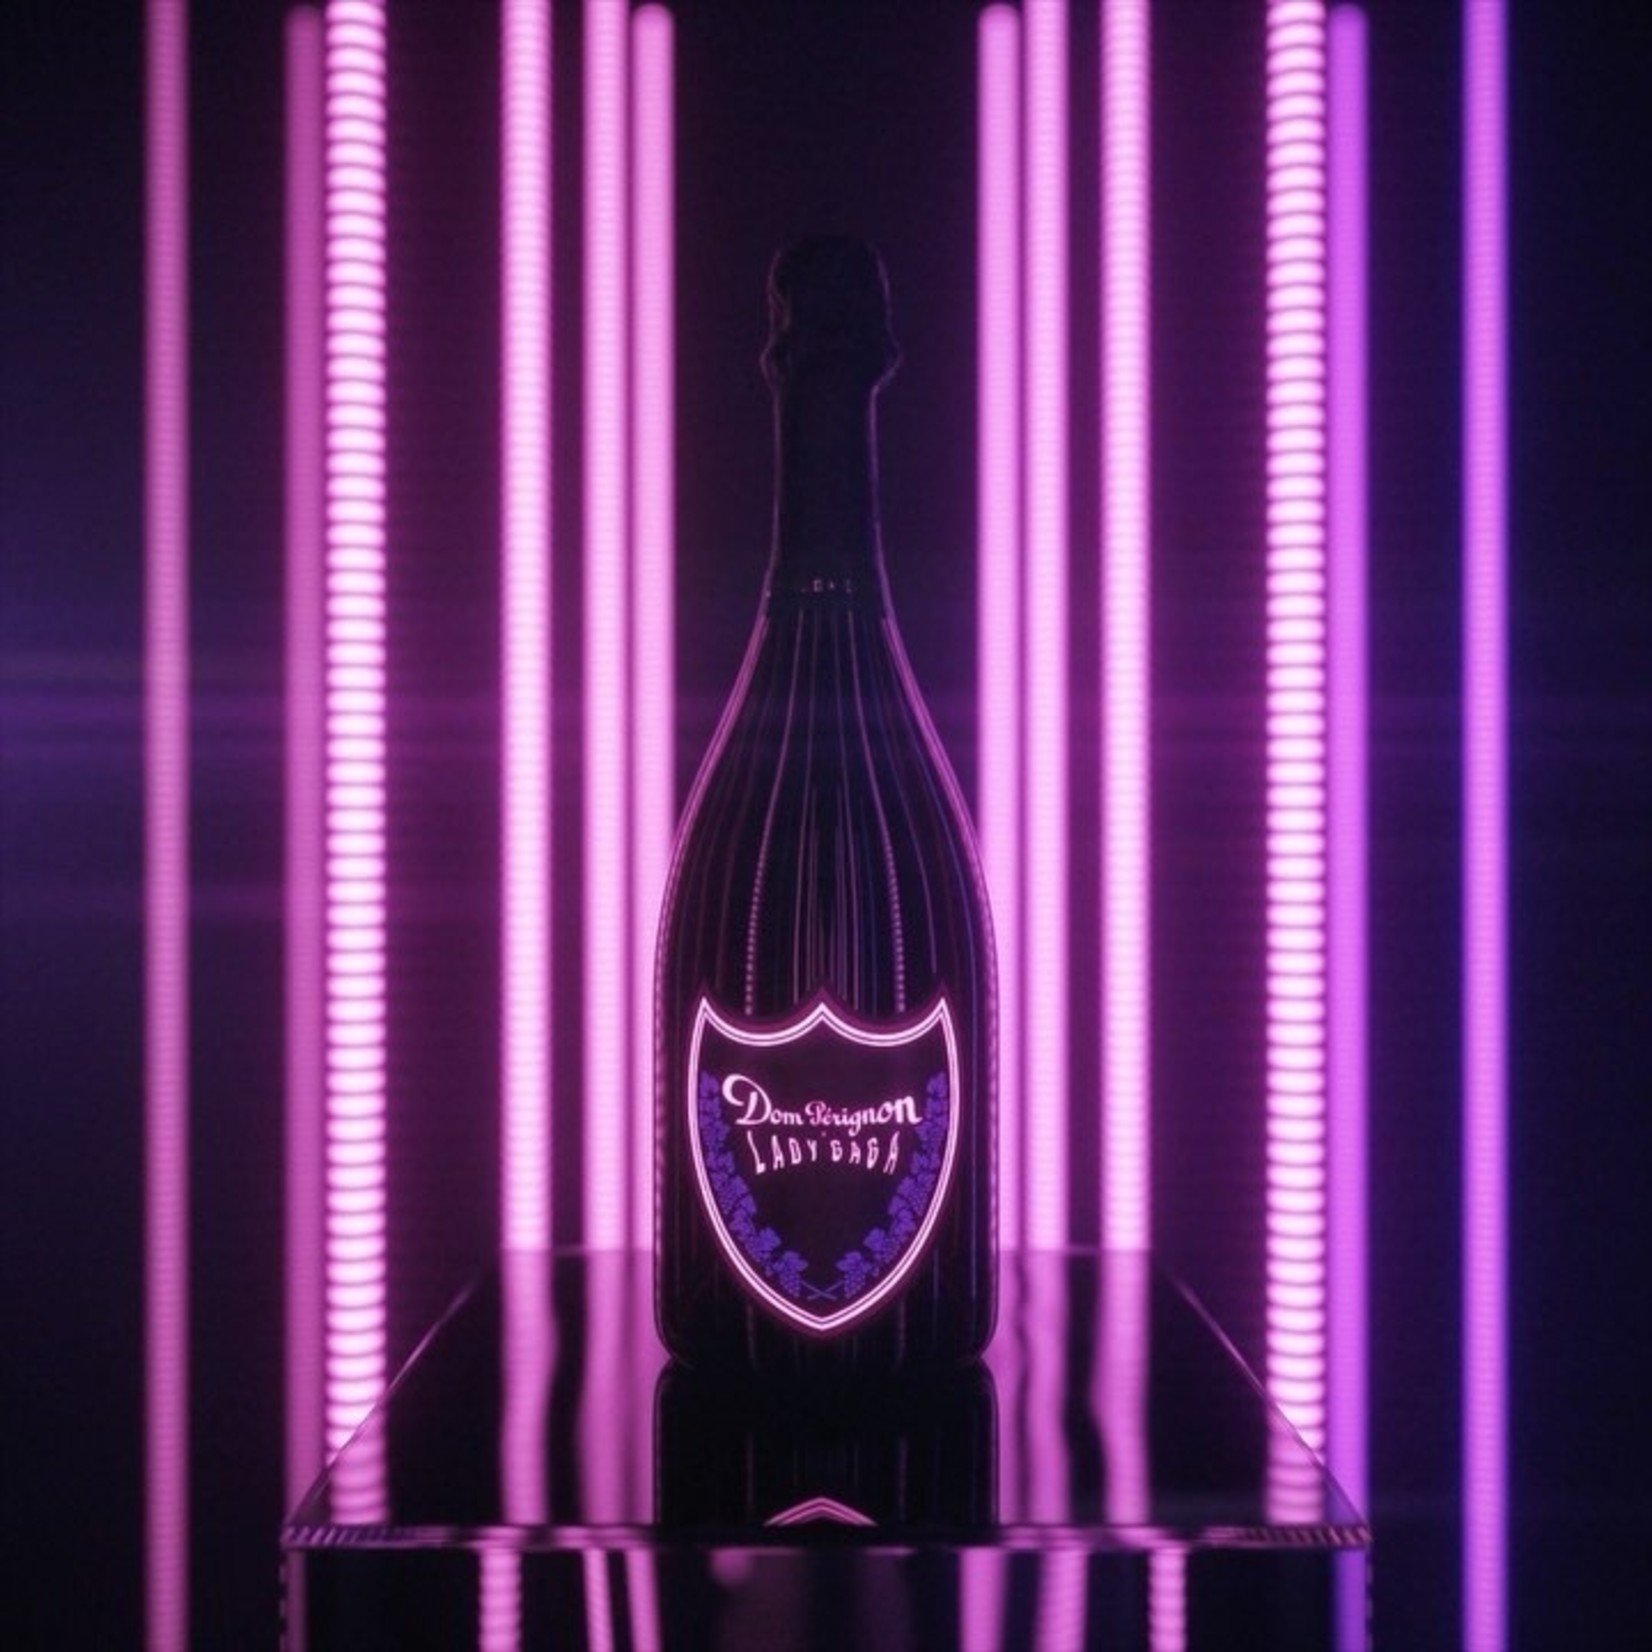 Dom Perignon's Luminous Glowing Bottle